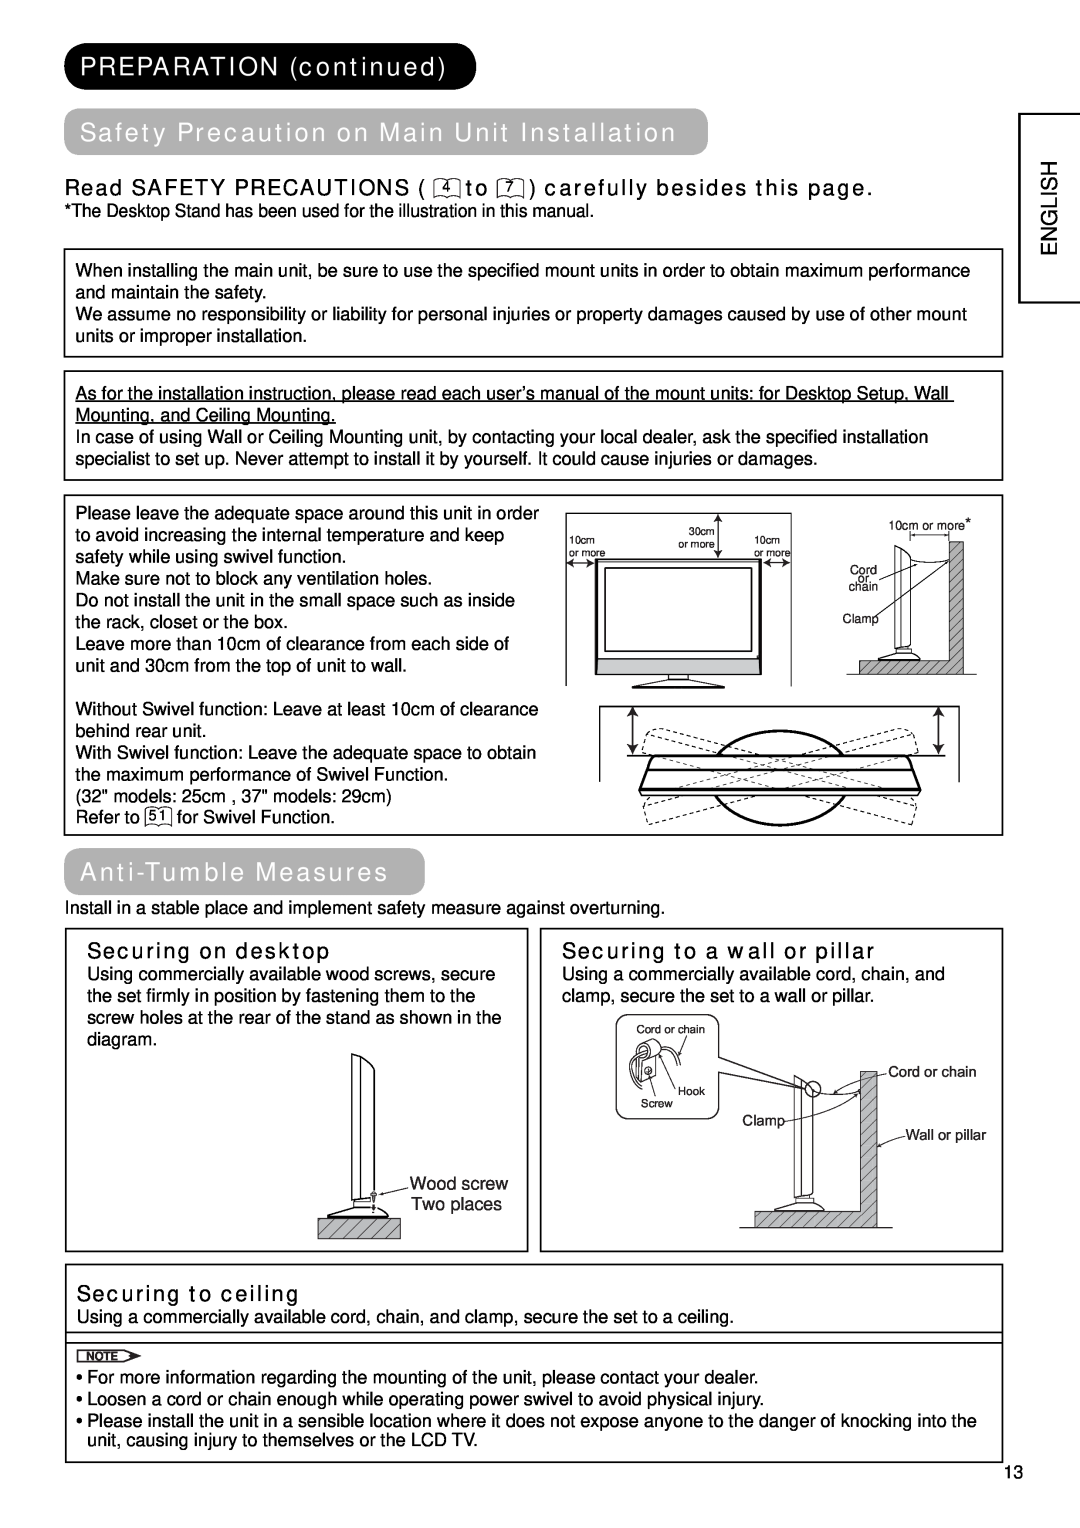 Hitachi 32LD9600 PREPARATION continued Safety Precaution on Main Unit Installation, Anti-Tumble Measures, English 